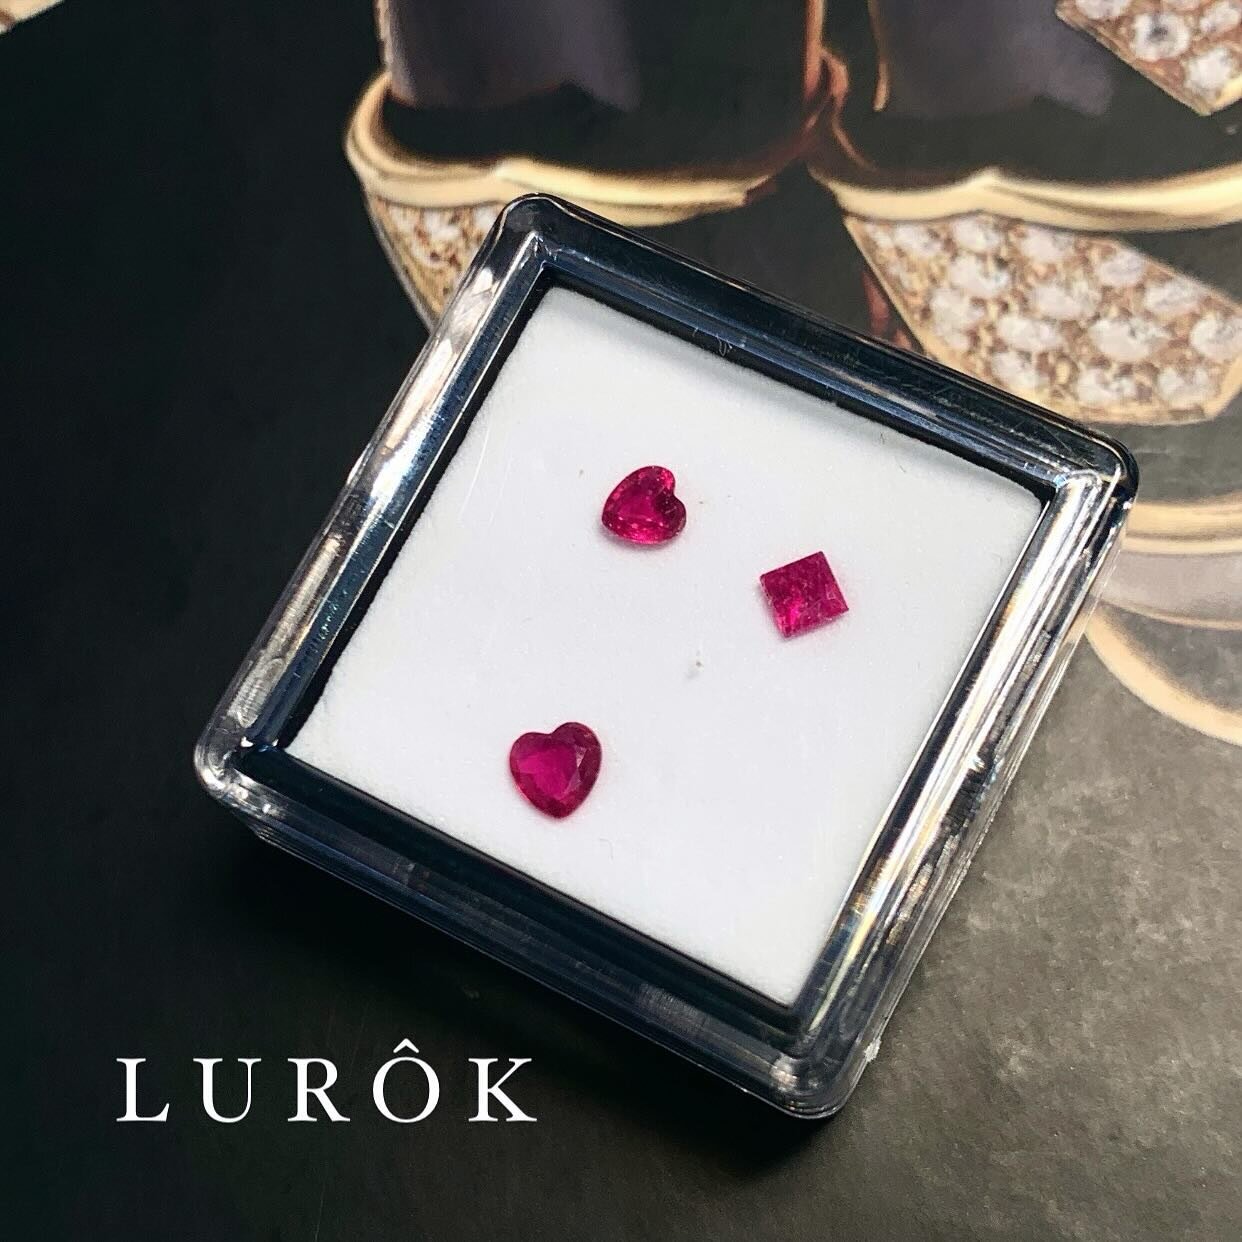 You Are Loved ❤️ 
.
.
.
#ruby #rubyheart #rubyjewelry #finejewelry #goldjewellery #jewelrydesigner #luxurylifestyle #luxuryjewelry #bespokejewelry #lurok #lurokjewelry